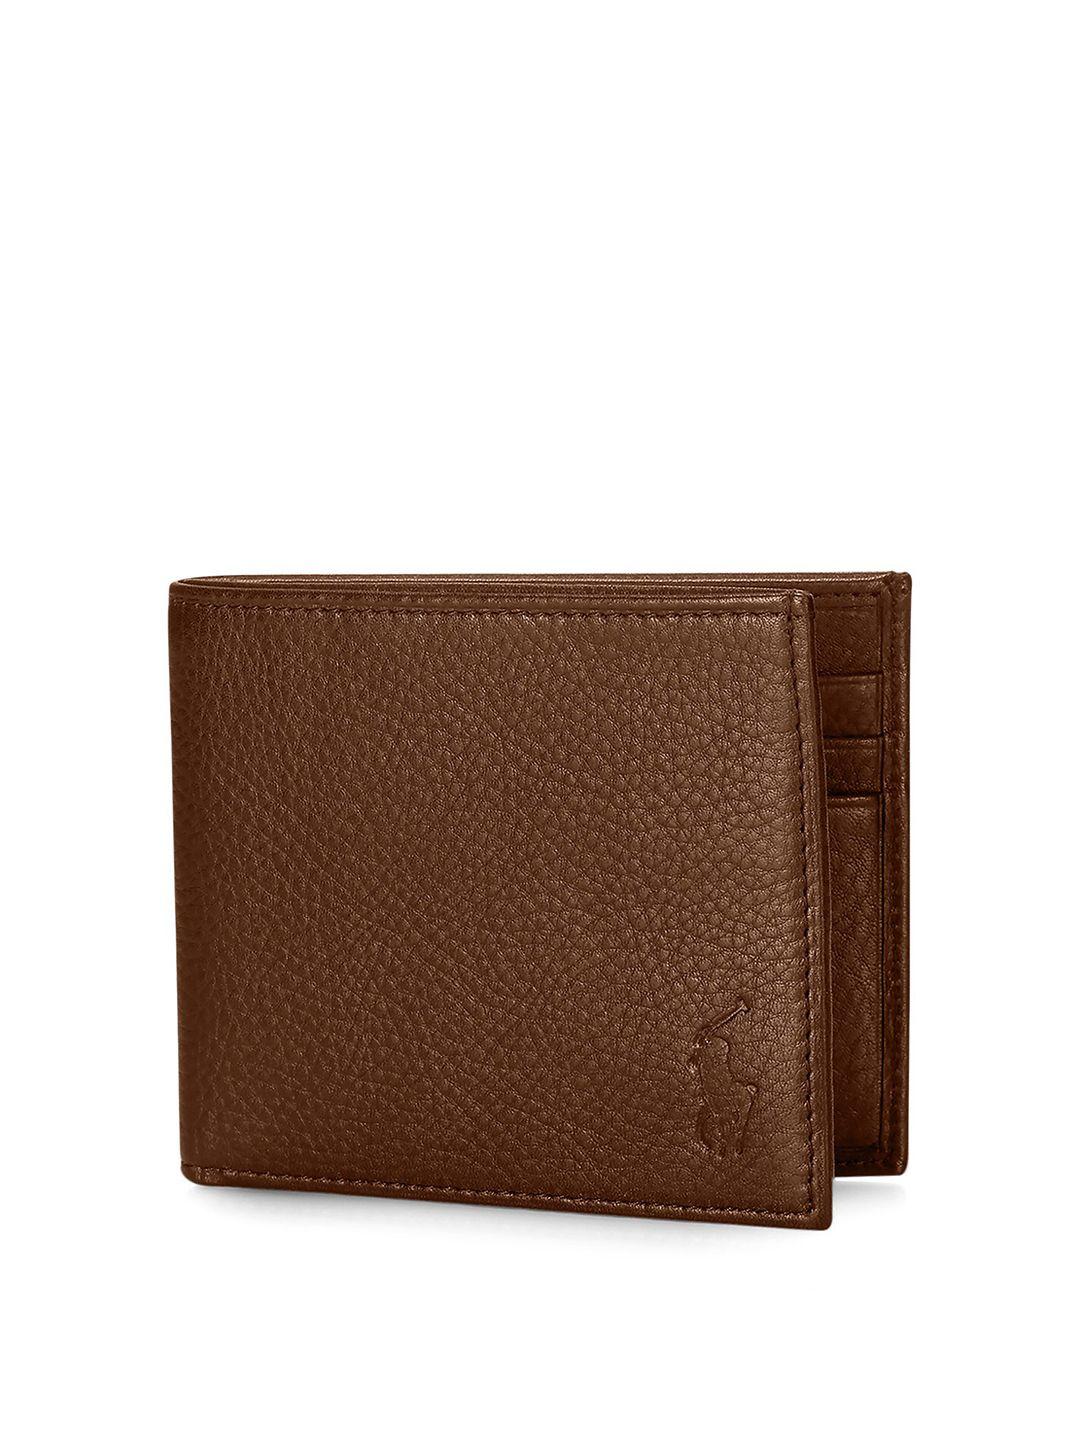 polo ralph lauren men leather billfold wallet